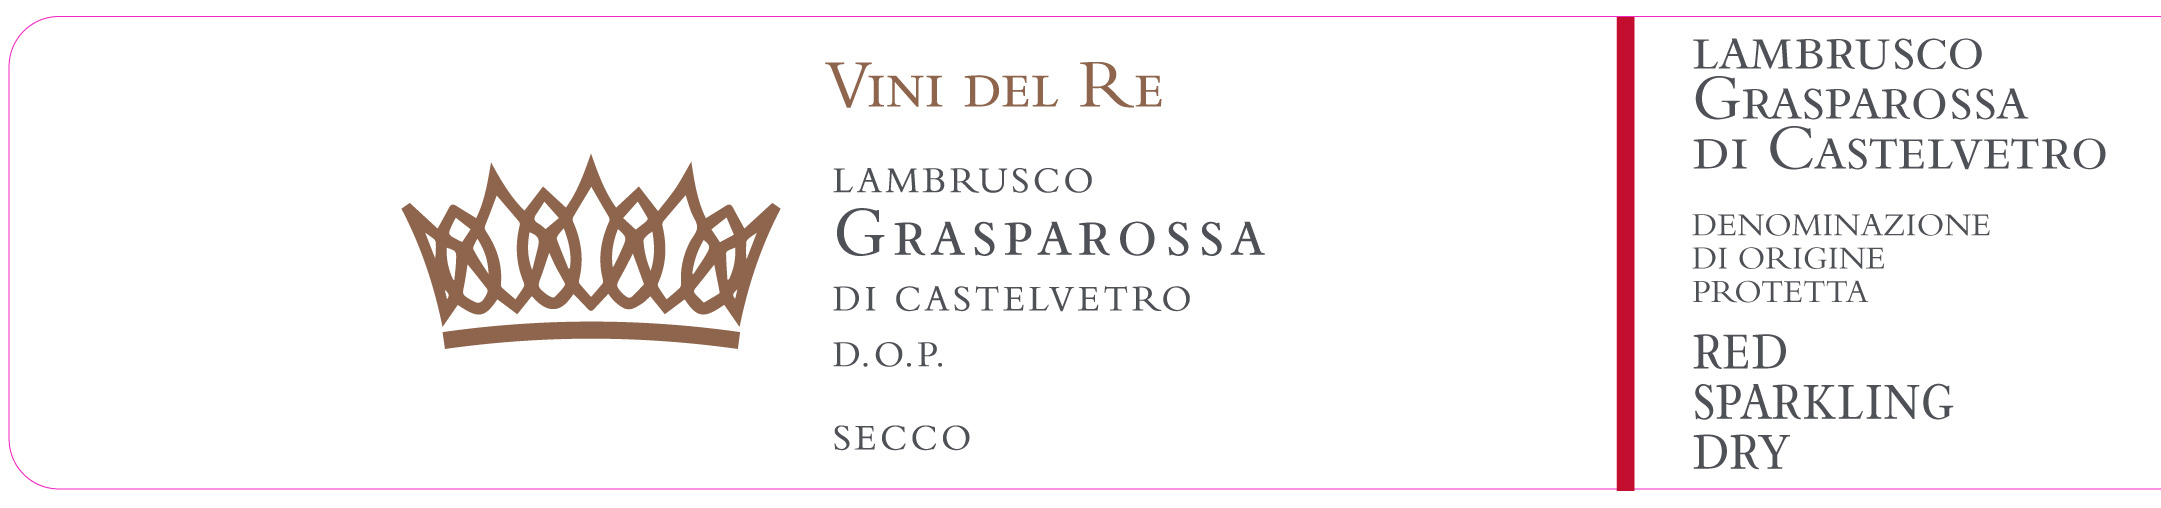 Vini Del Re Lambrusco label